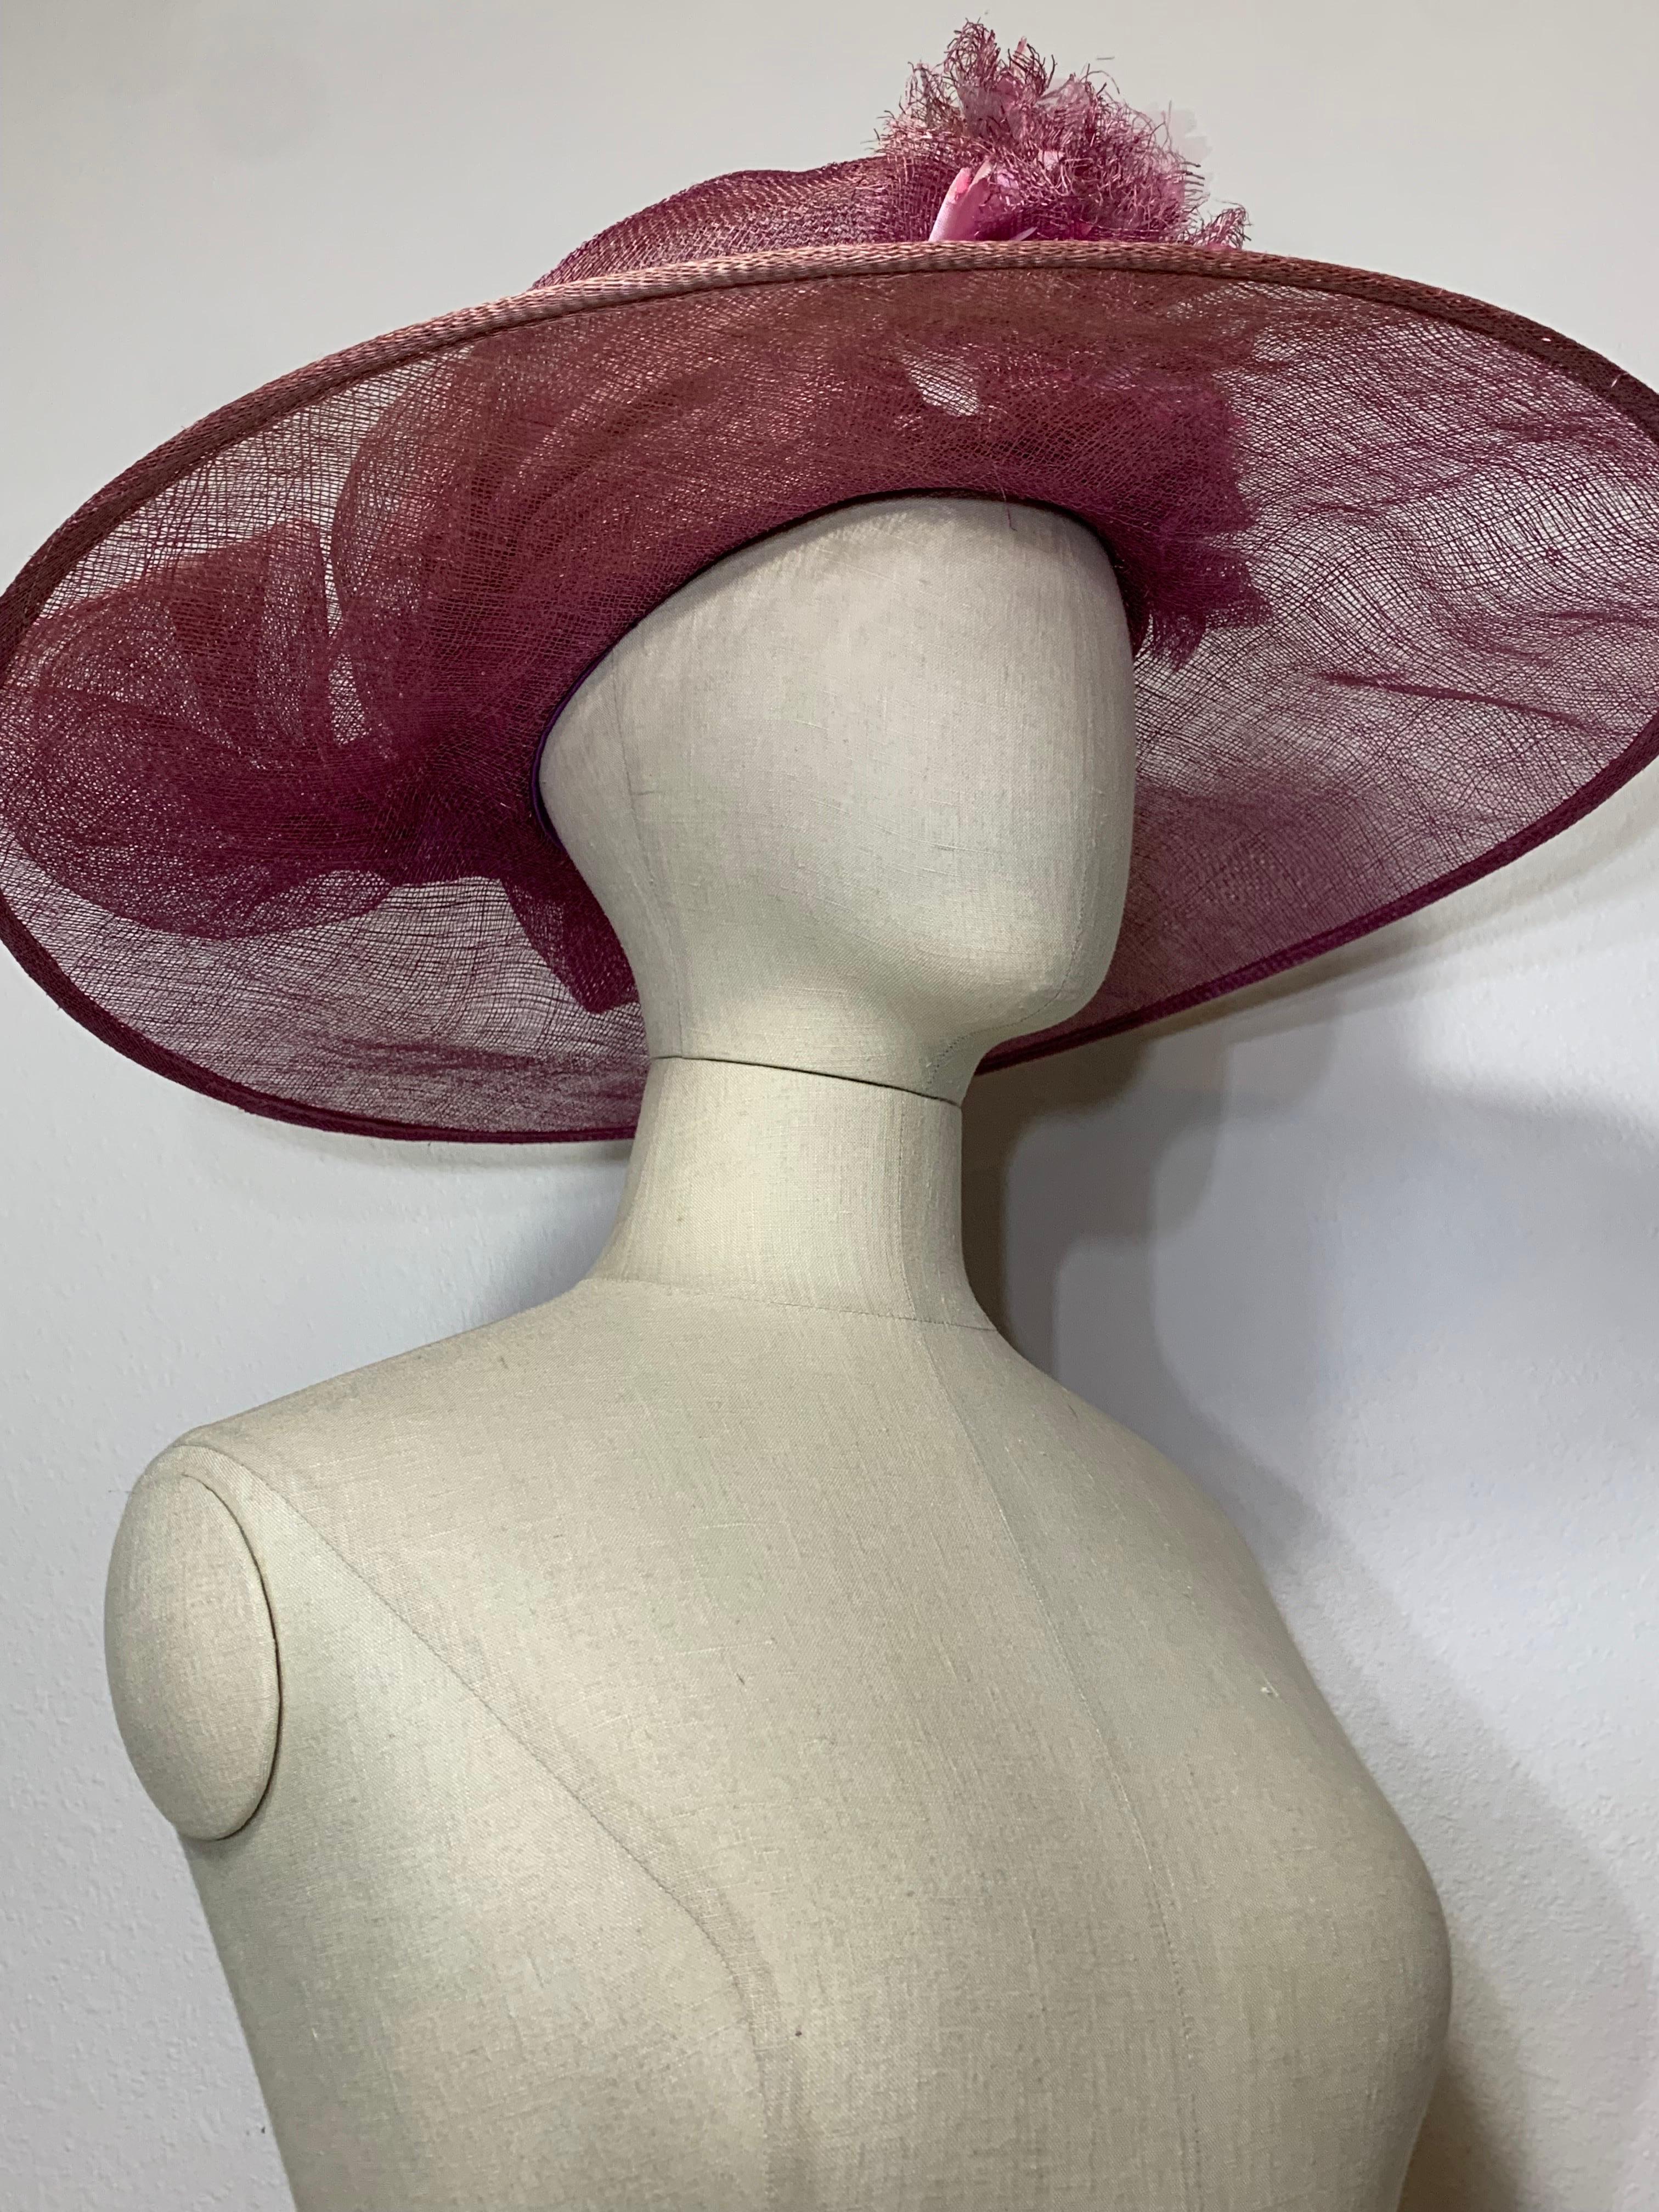 Maison Michel Spring/Summer Mauve Sheer Straw Cartwheel Wide Brim Hat w Flowers For Sale 8